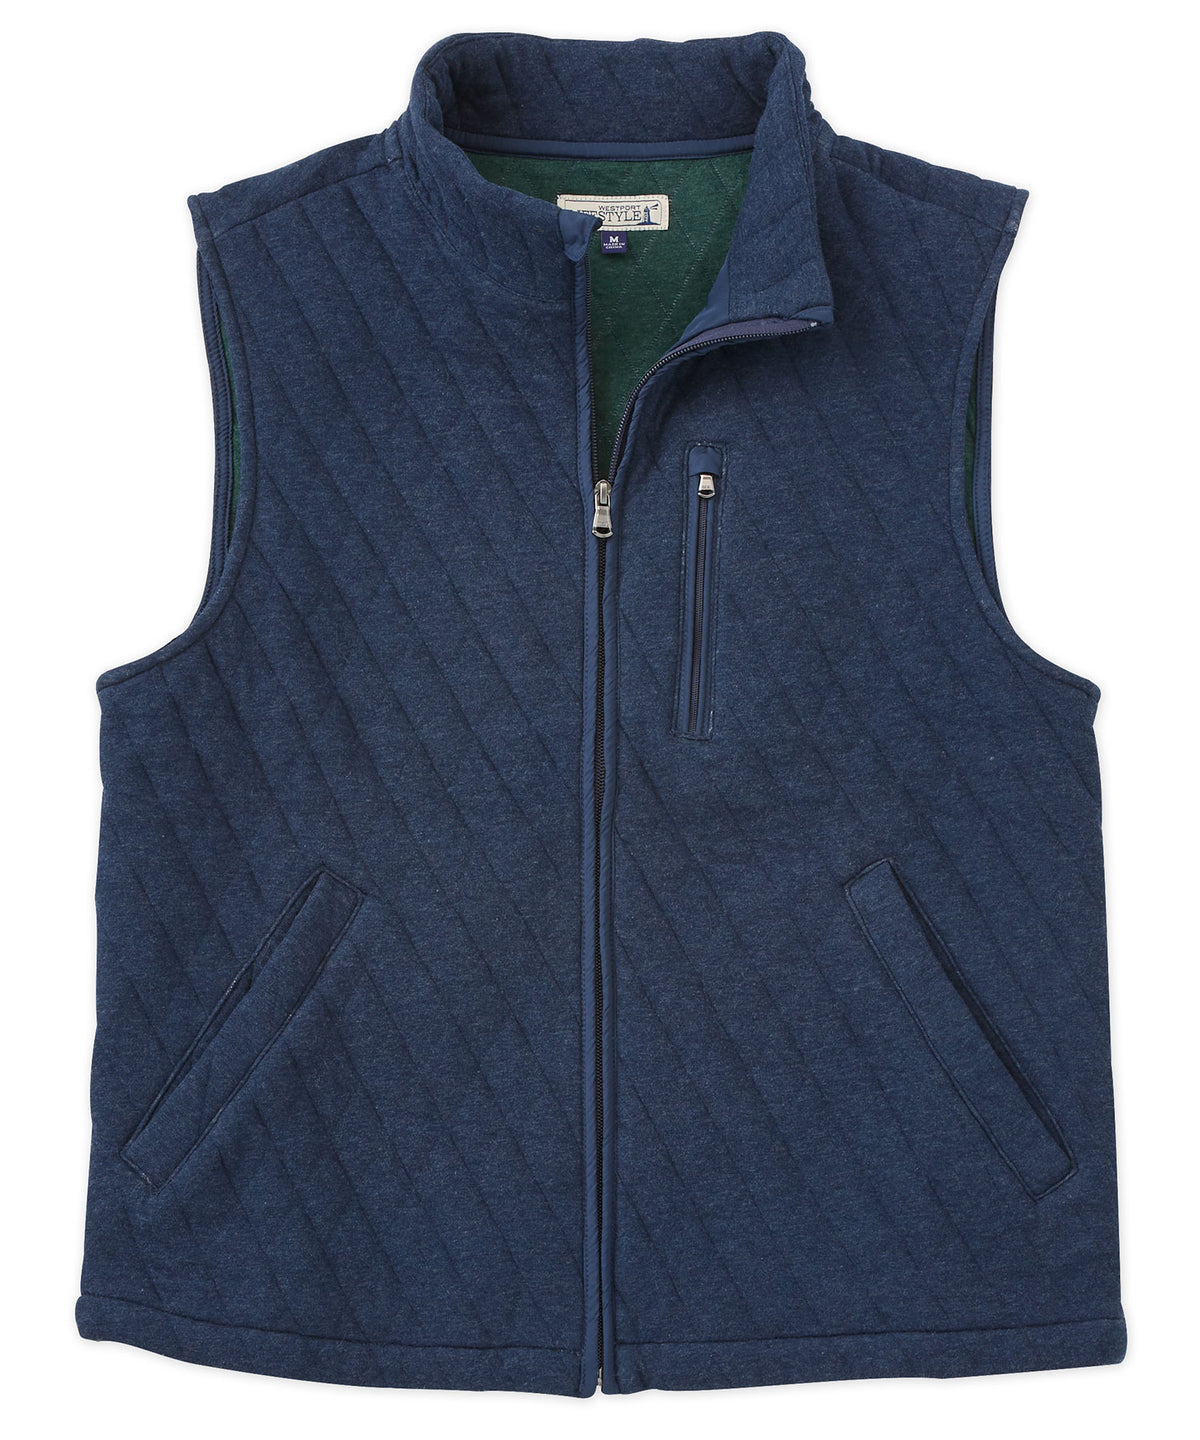 Westport Lifestyle Full Zip Quilted Knit Vest, Men's Big & Tall